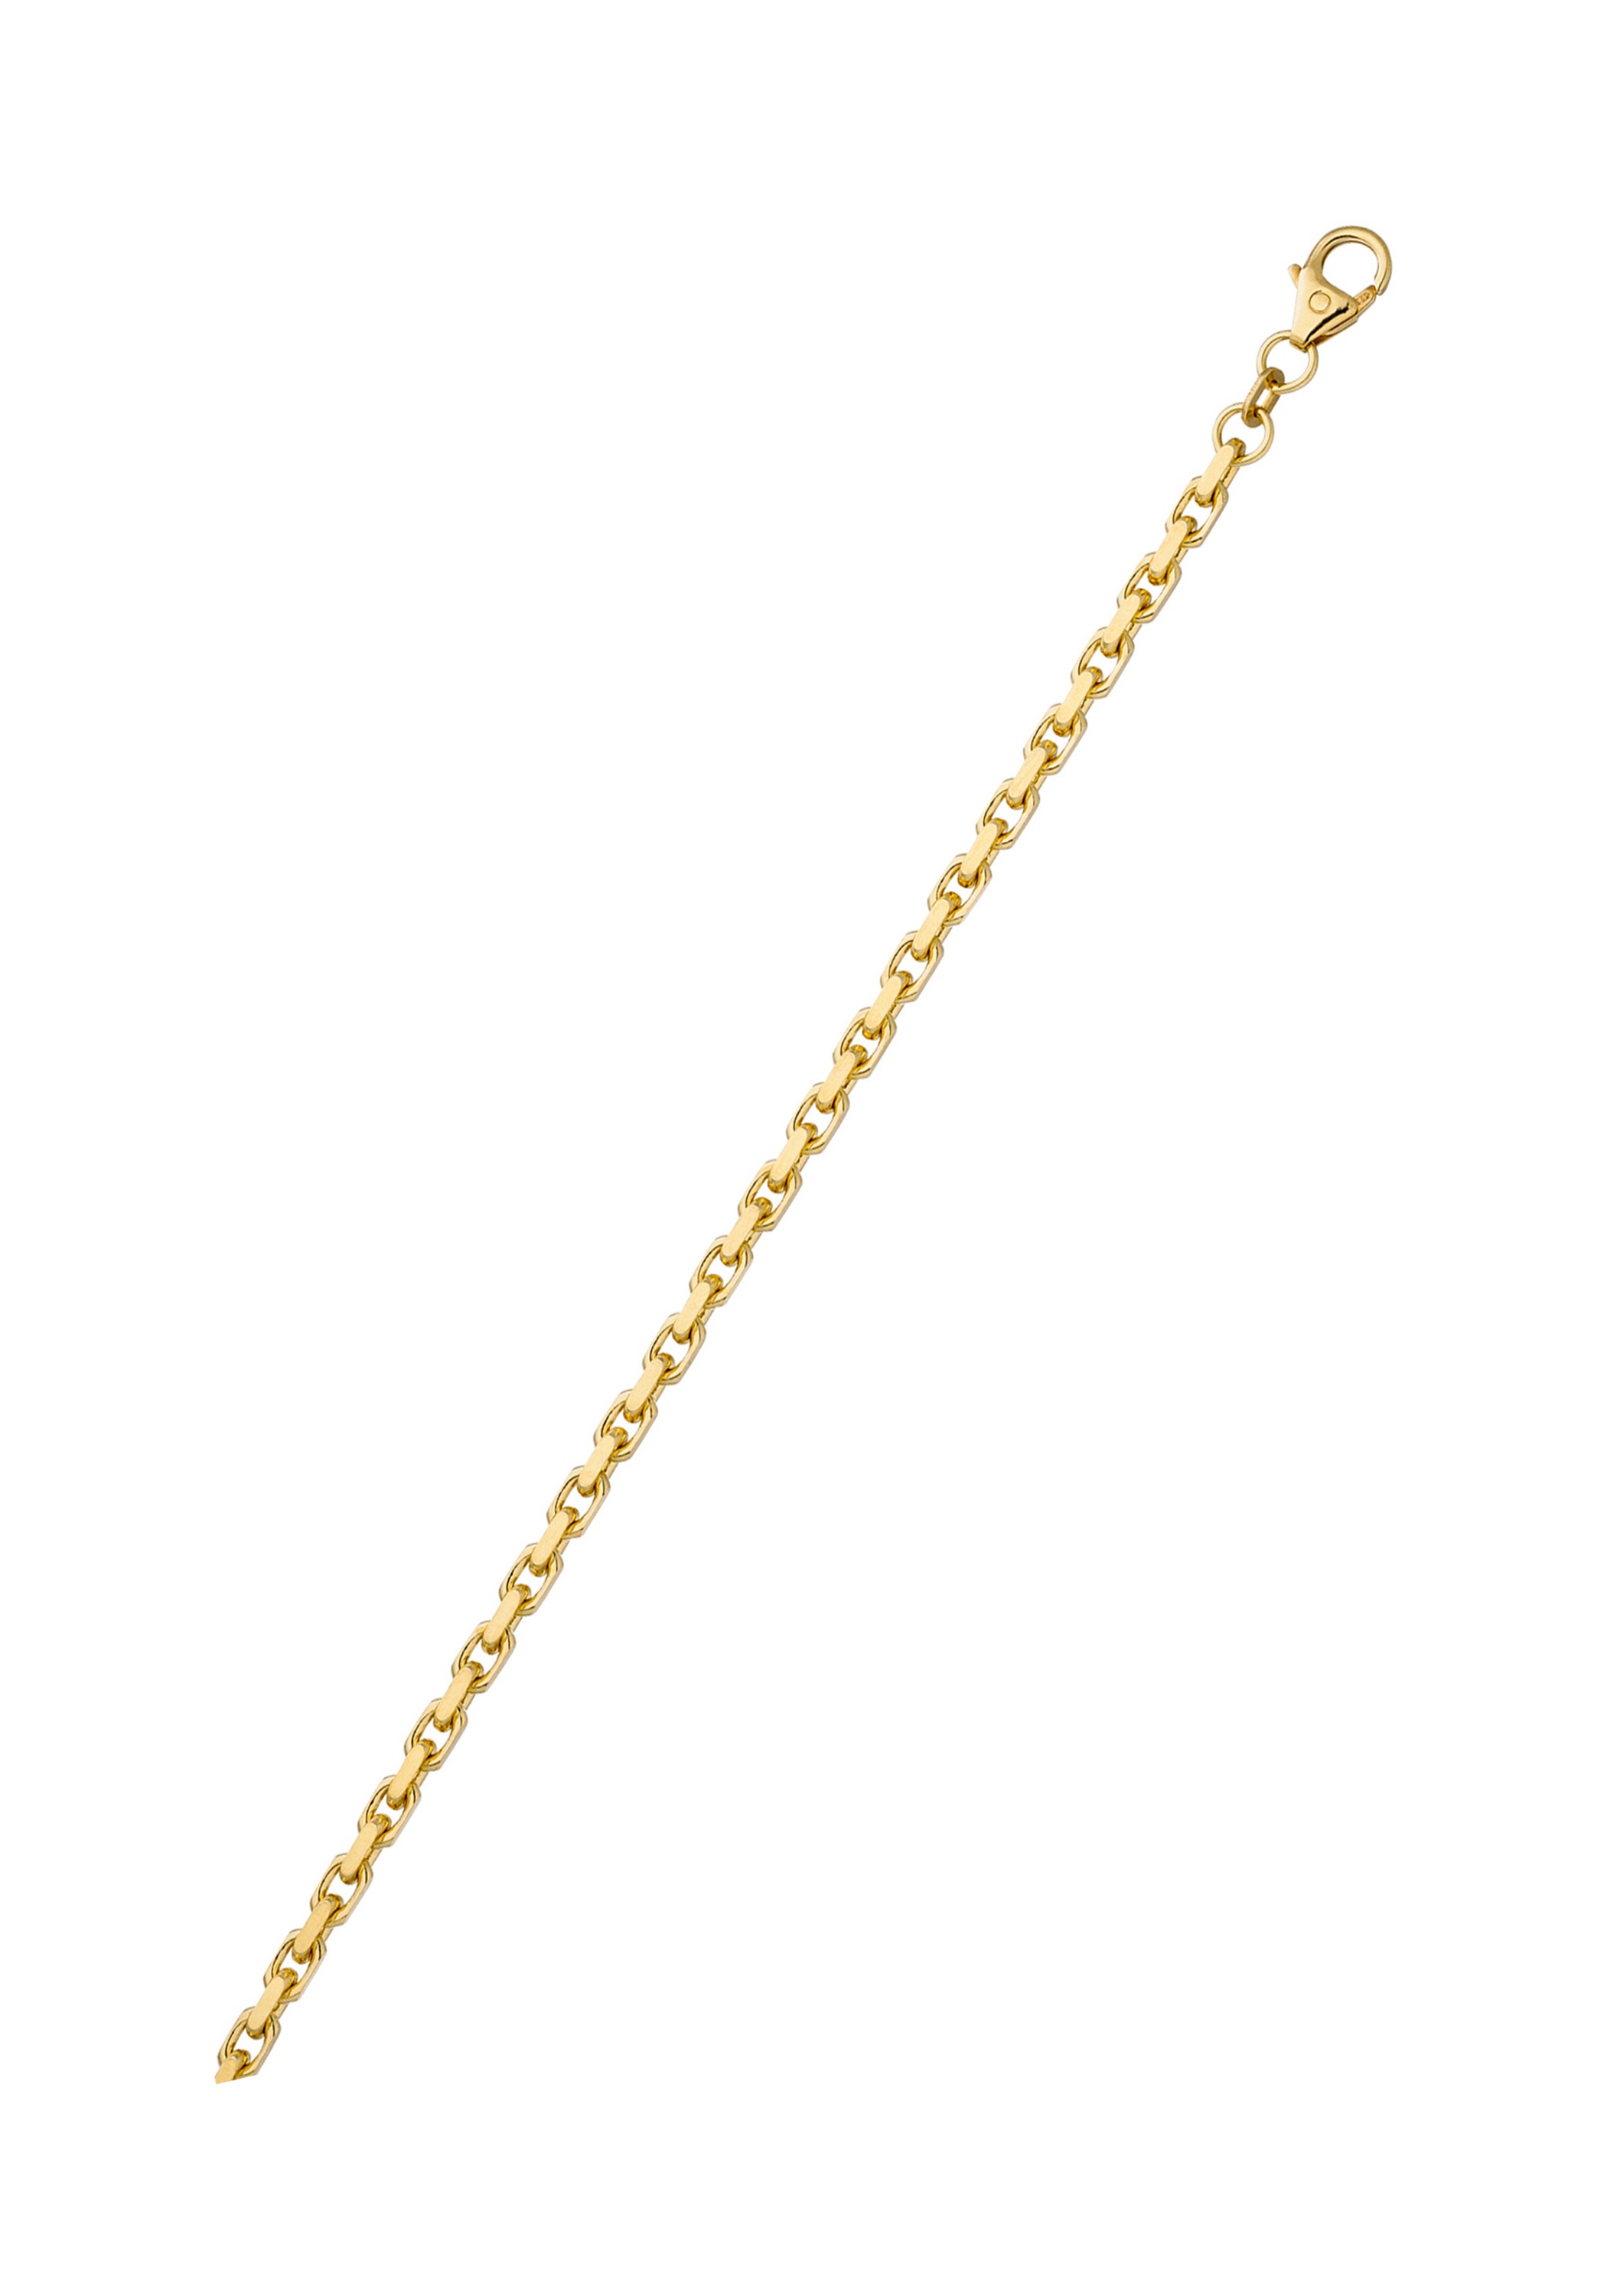 21 JOBO Ankerarmband Goldarmband »Anker-Armband« diamantiert cm 333 Gold